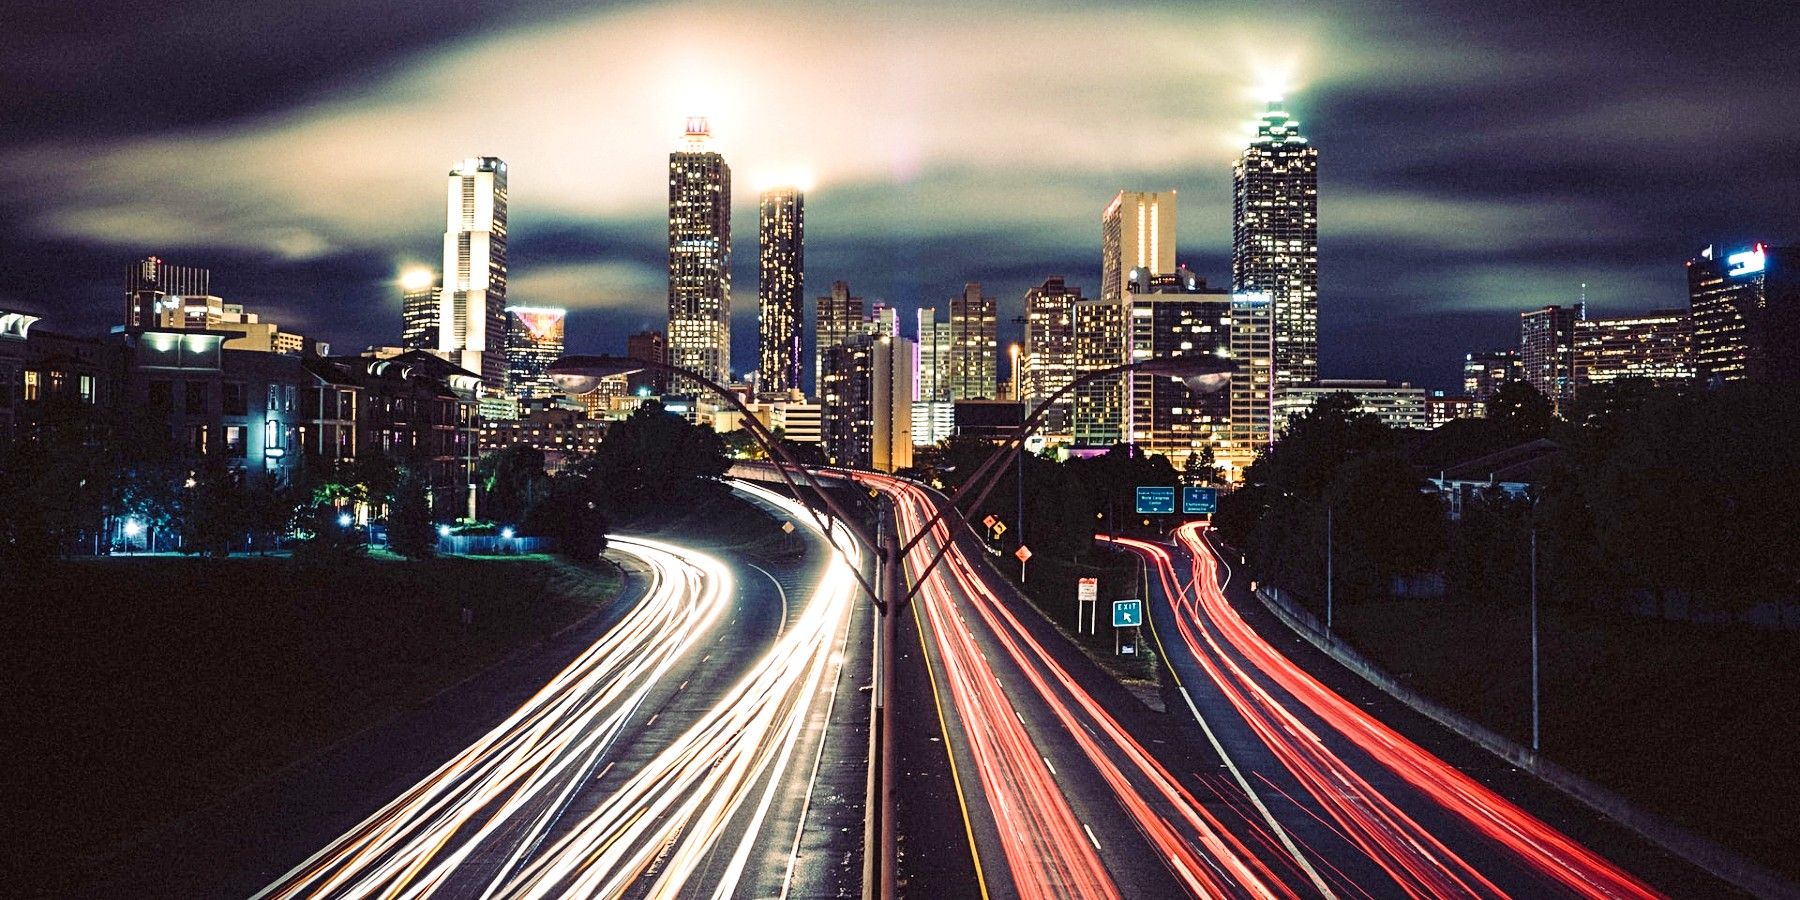 Skyline City Lights. Photo via Unsplash